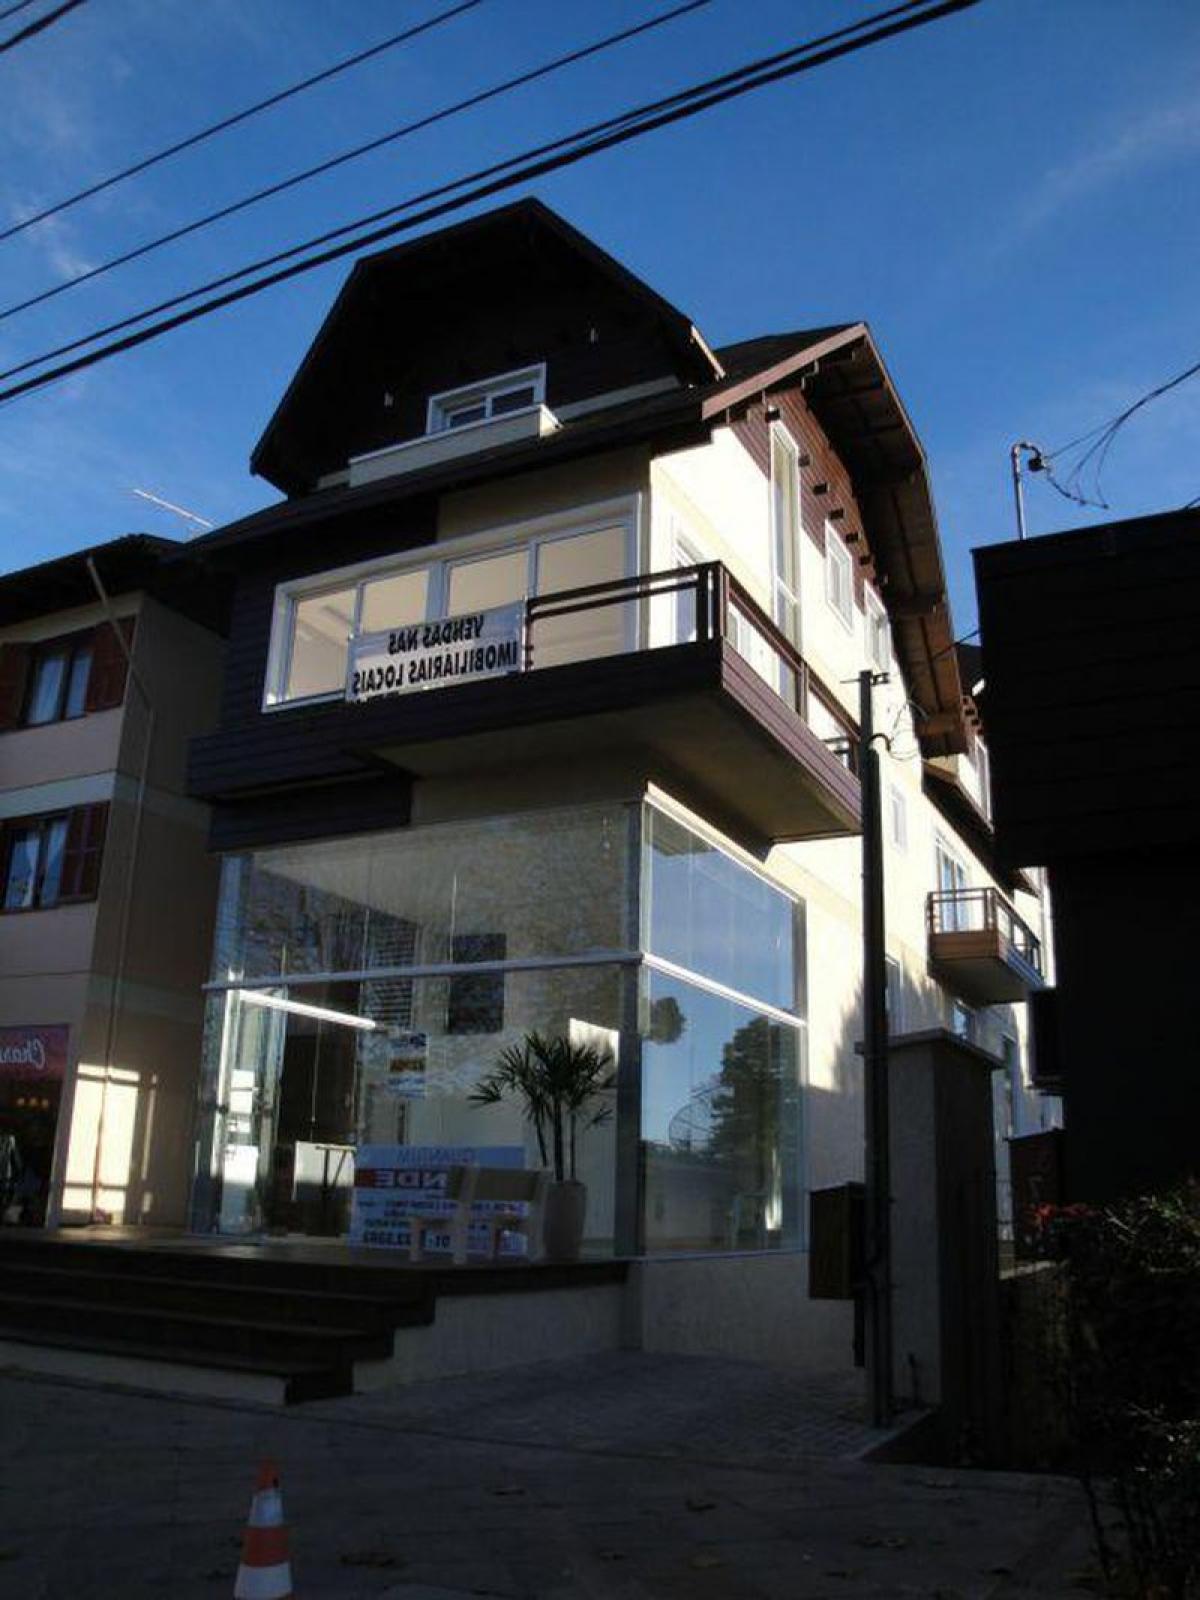 Picture of Commercial Building For Sale in Canela, Rio Grande do Sul, Brazil